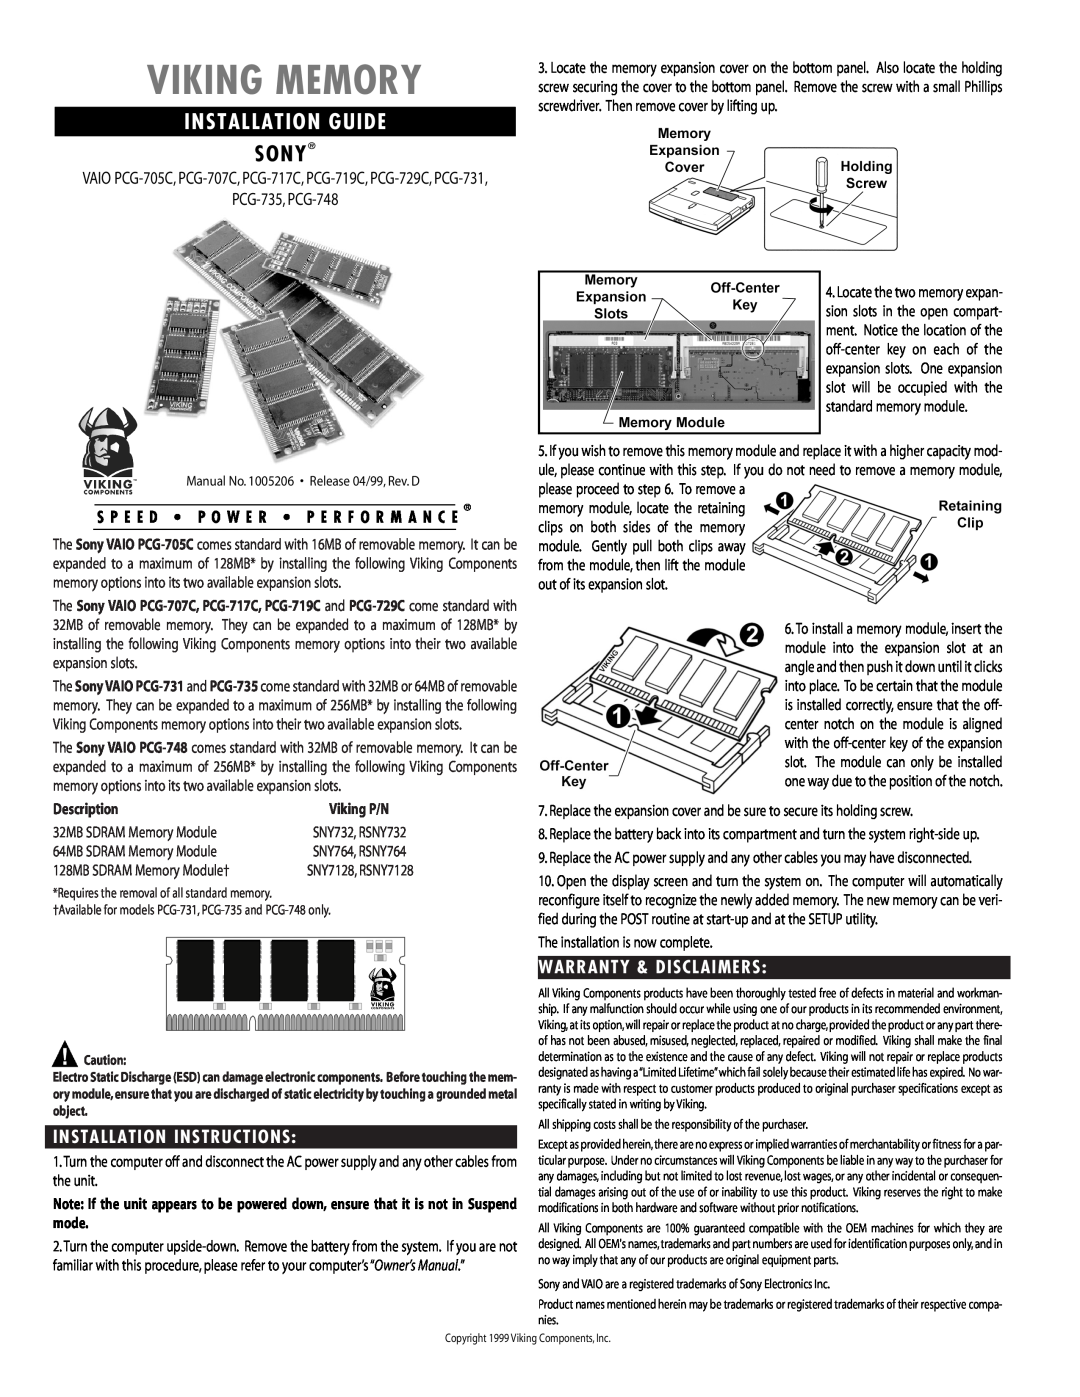 Viking InterWorks PCG-707C, PCG-717C installation instructions Viking Memory, Installation Guide, Sony, PCG-735, PCG-748 